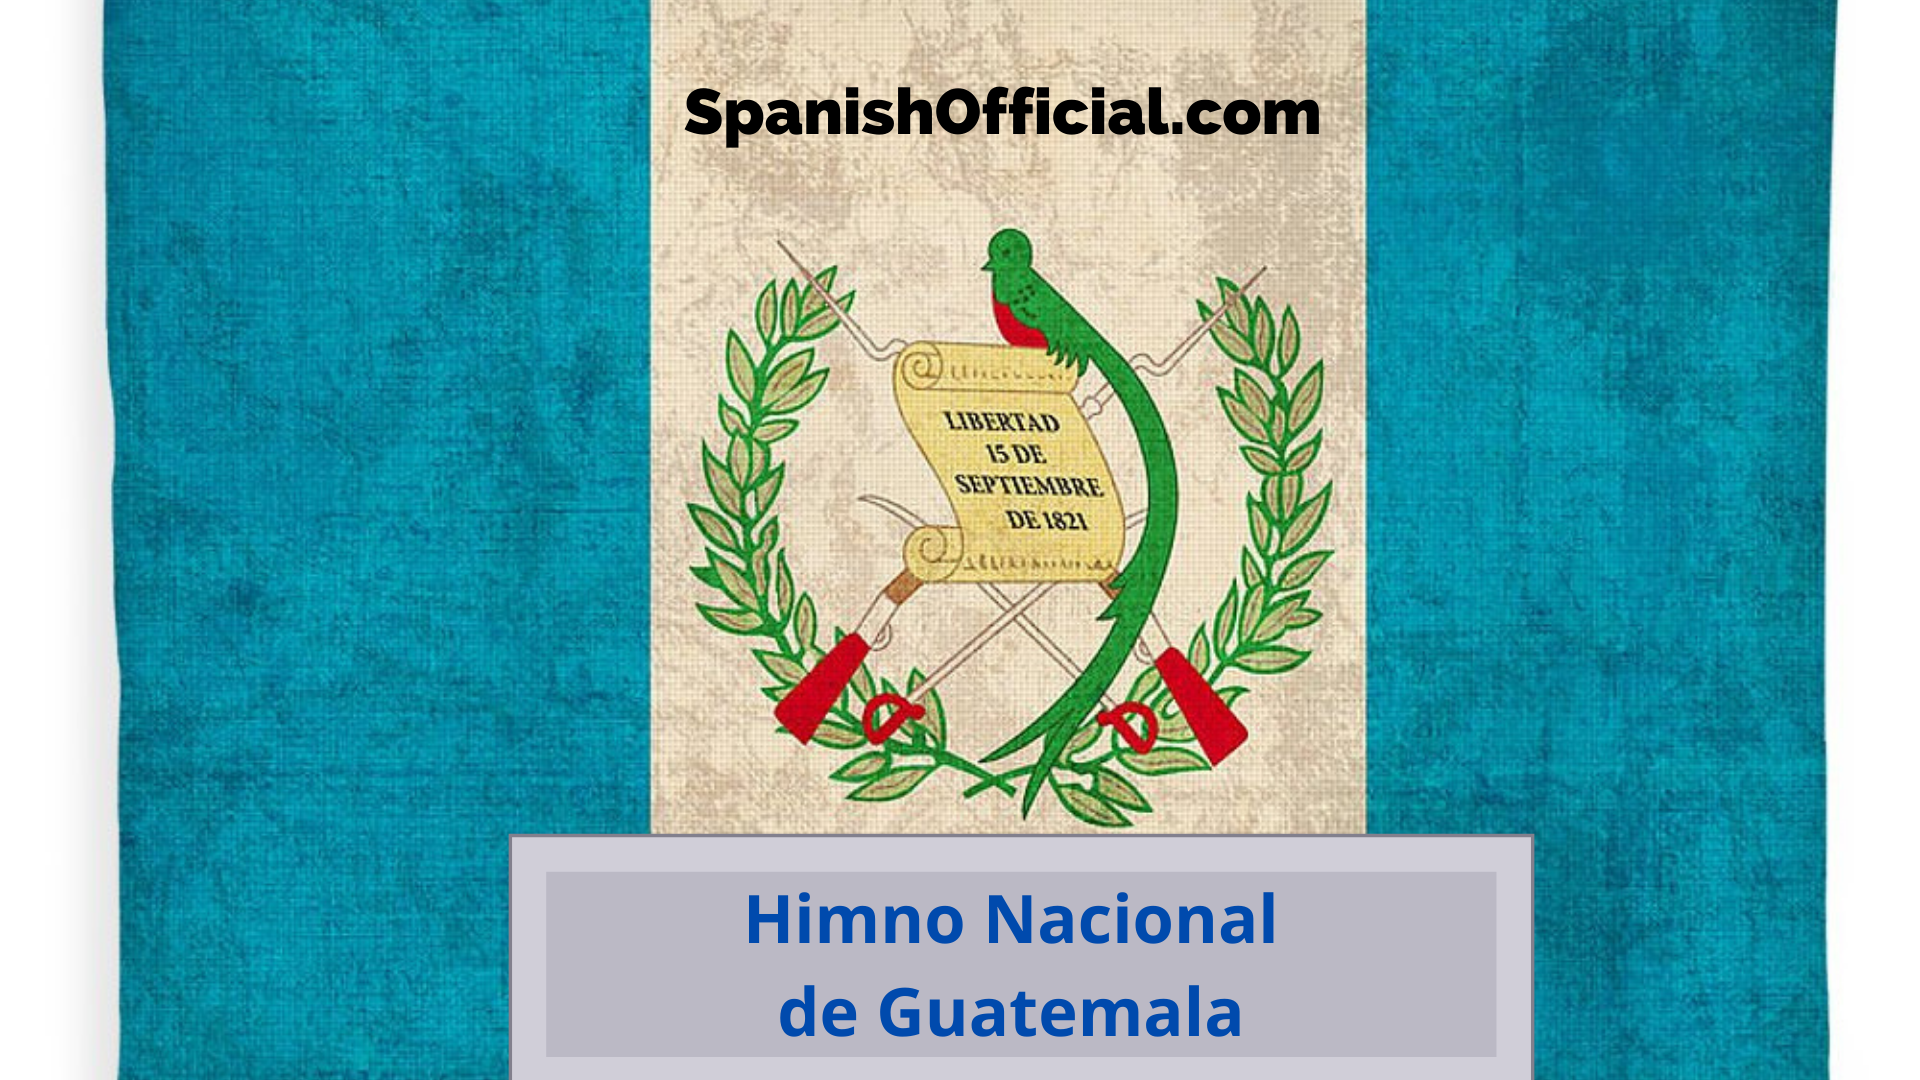 Himno Nacional de Guatemala - Official Website - SpanishOfficial